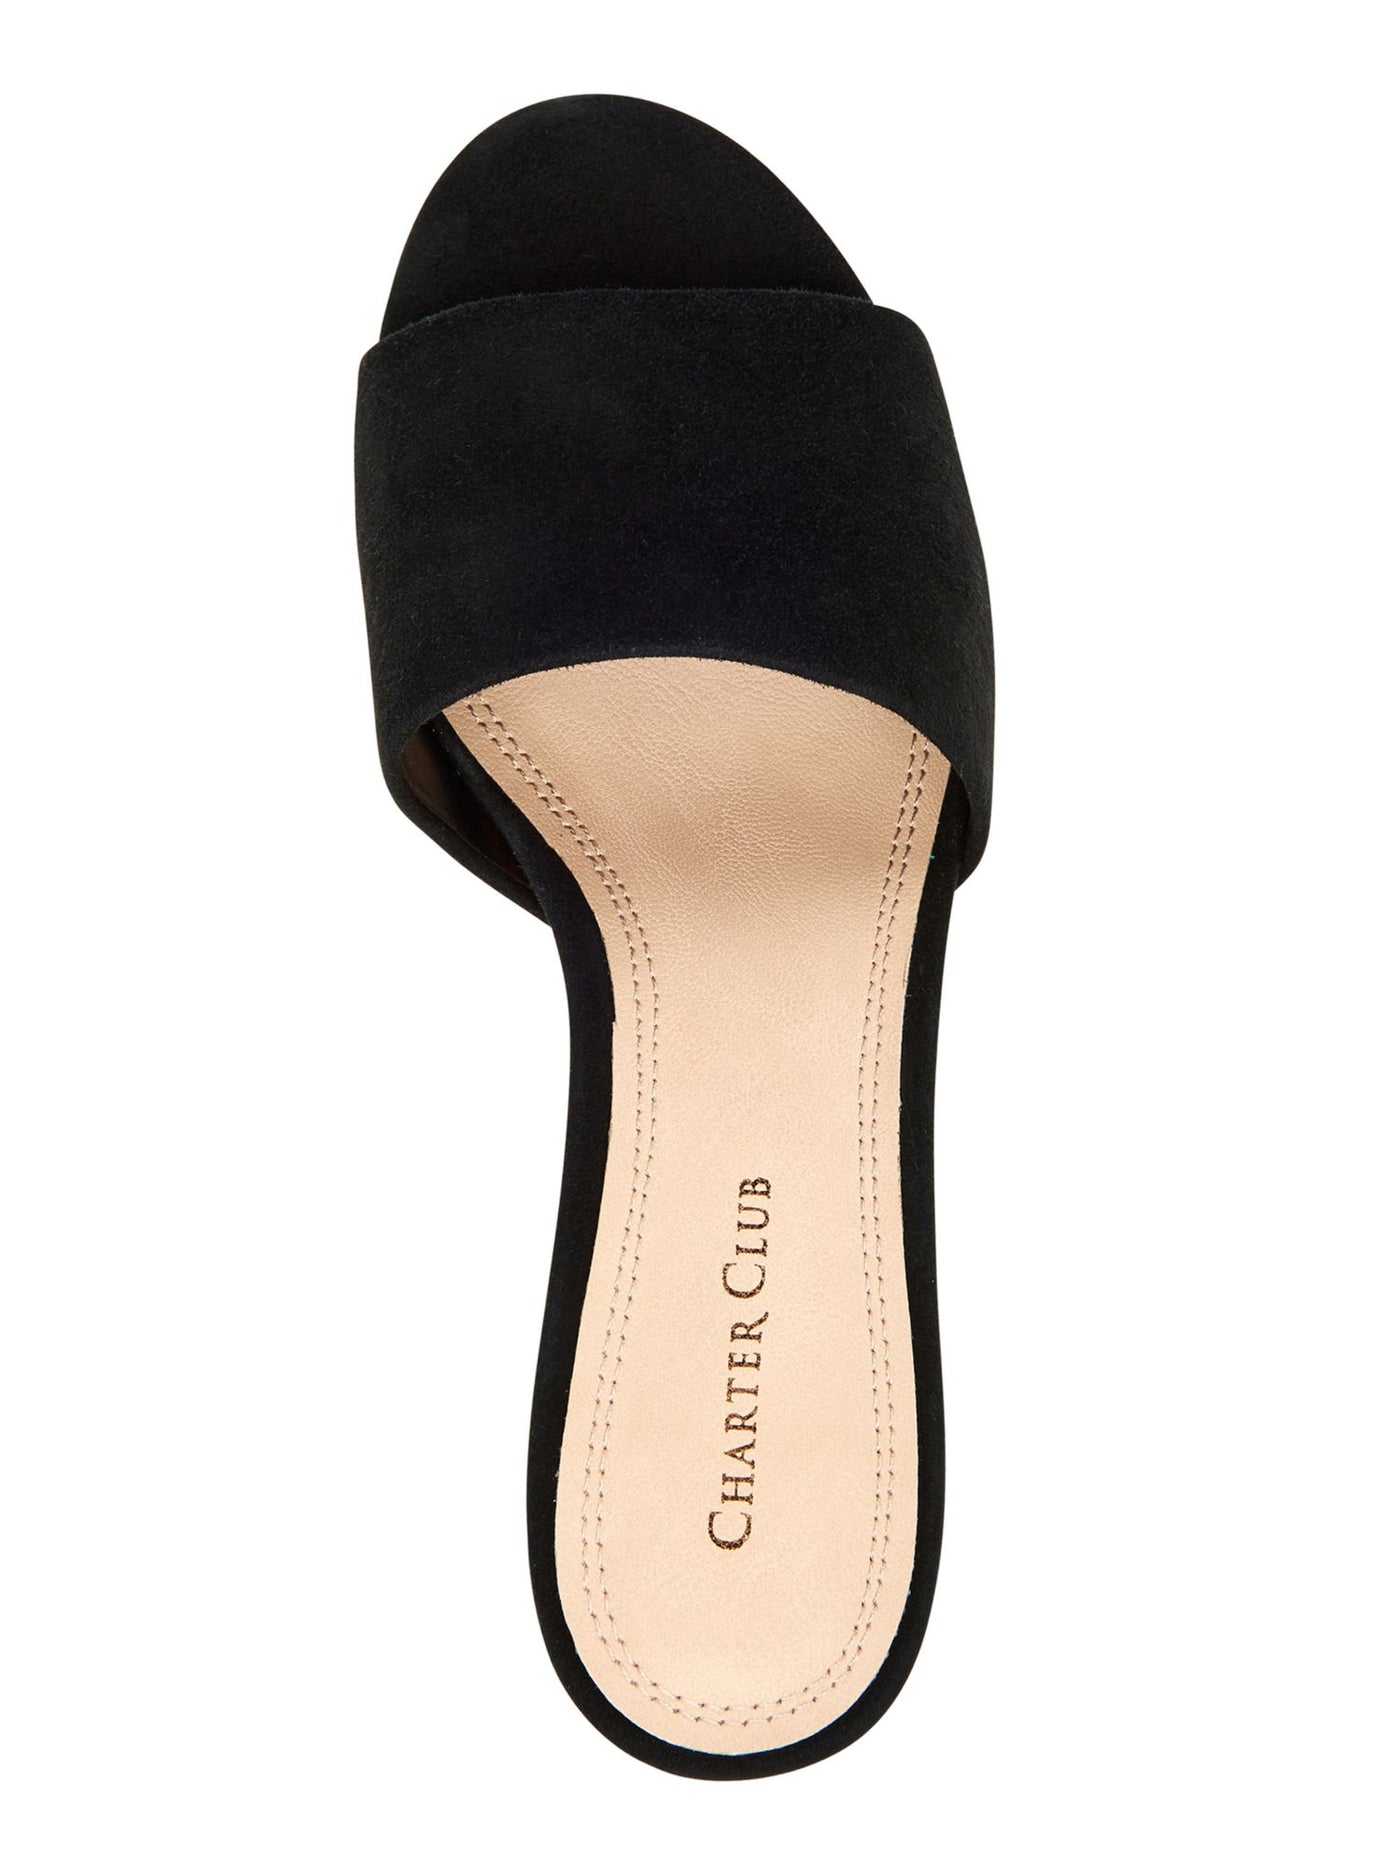 CHARTER CLUB Womens Black Cork Wedge Cushioned Nallahh Almond Toe Wedge Slip On Sandals Shoes 6 M